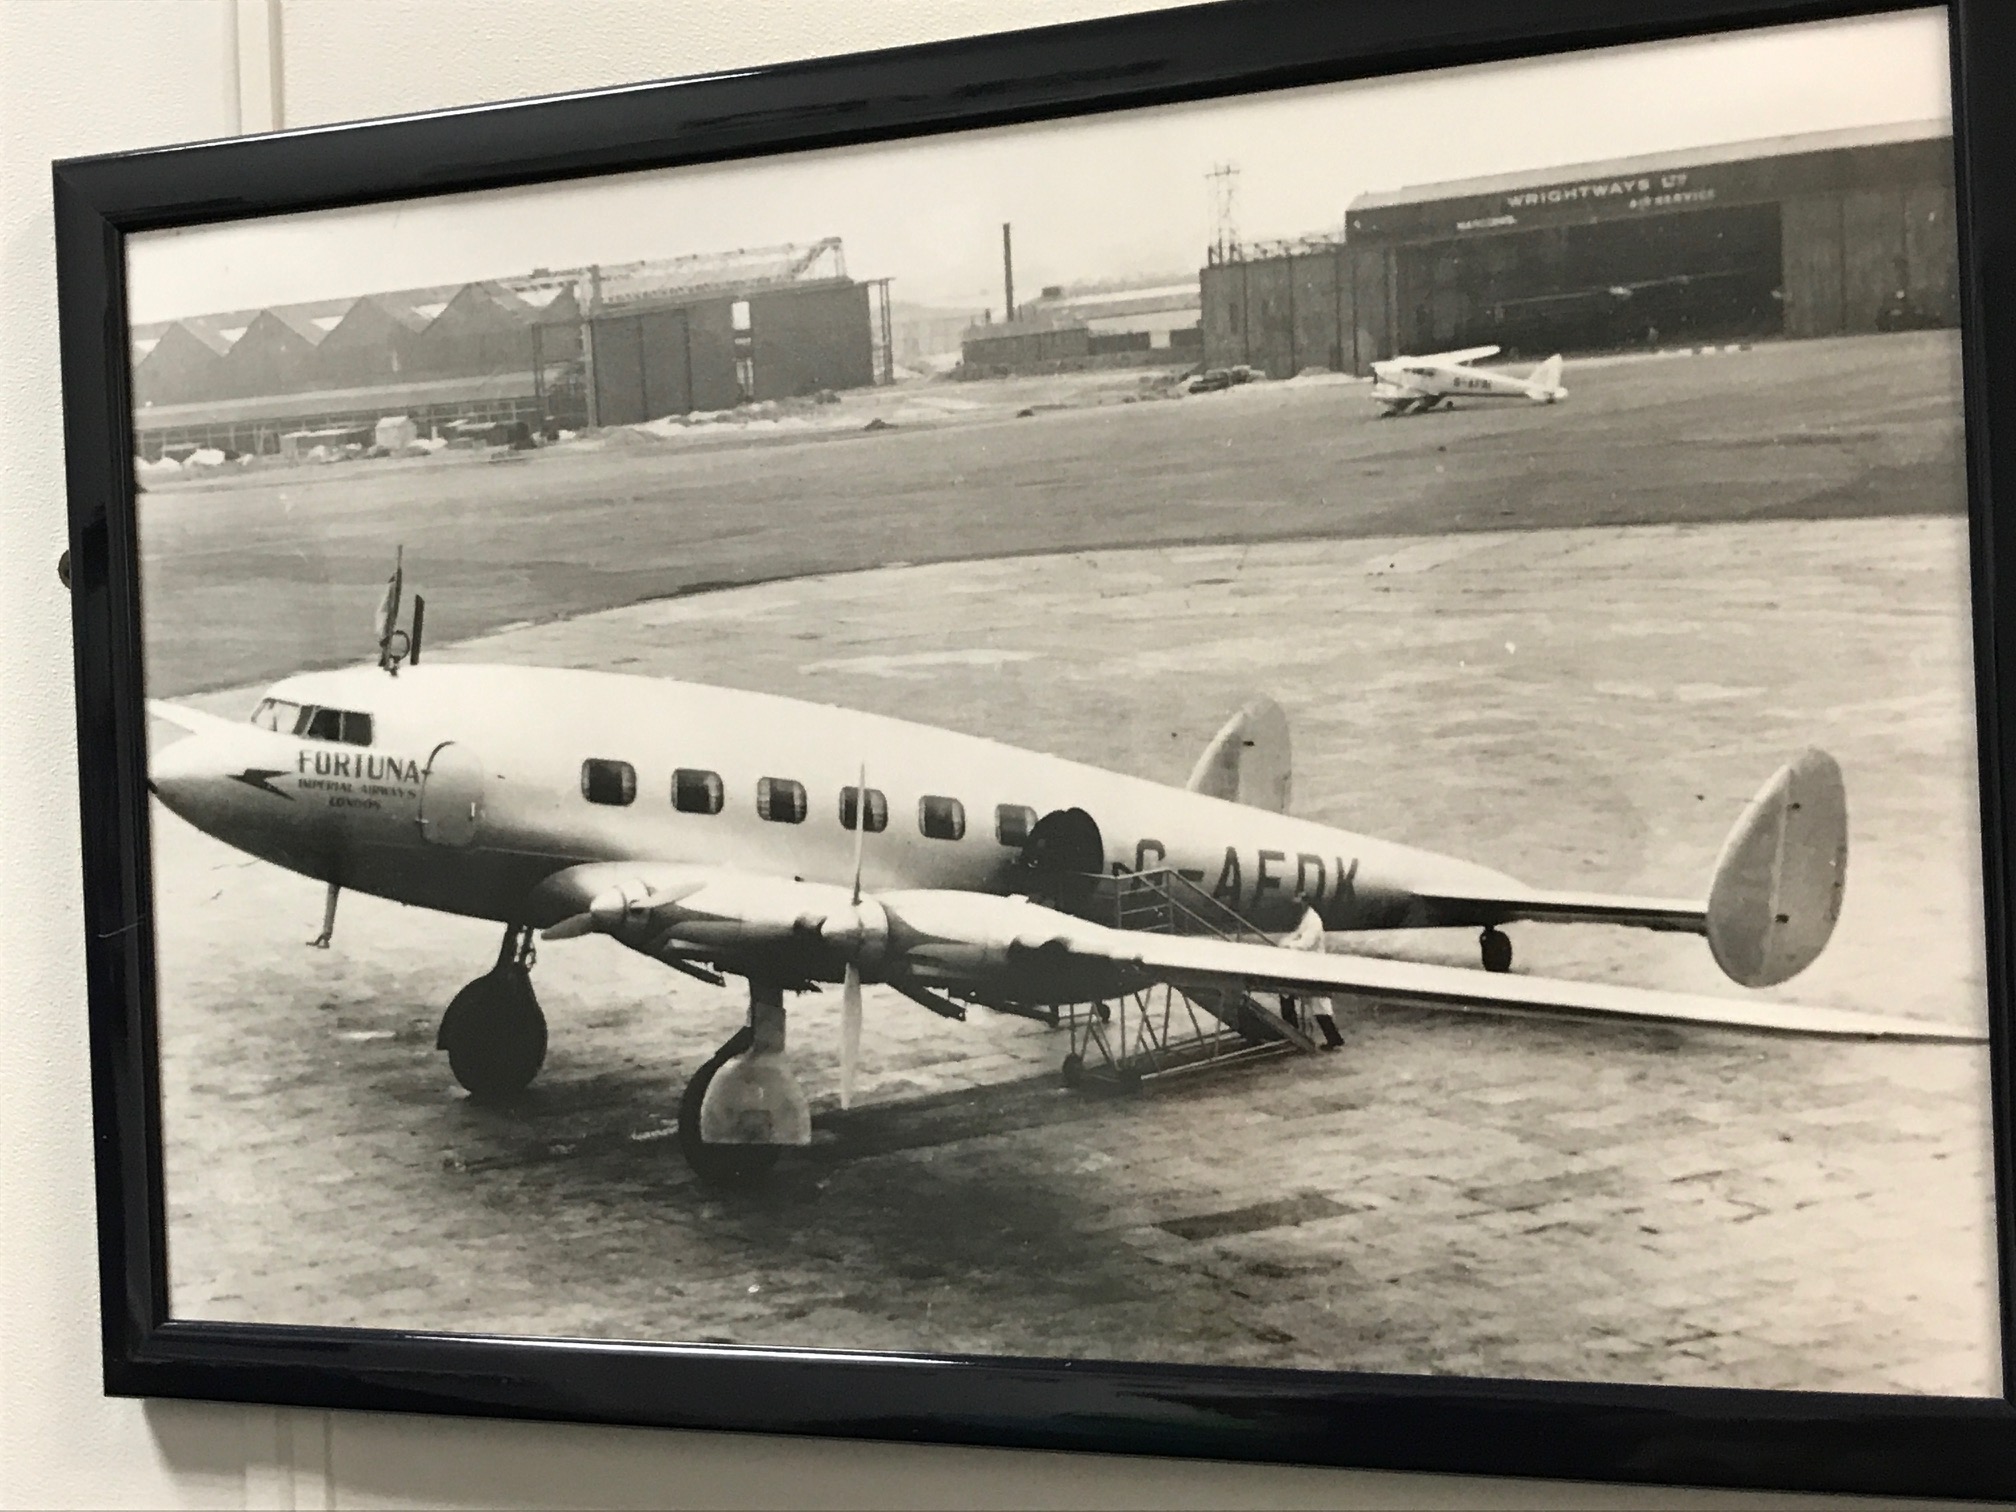 Croydon Airport: De Havilland Albatross. A later Imperial Airways airliner. 22 seats.